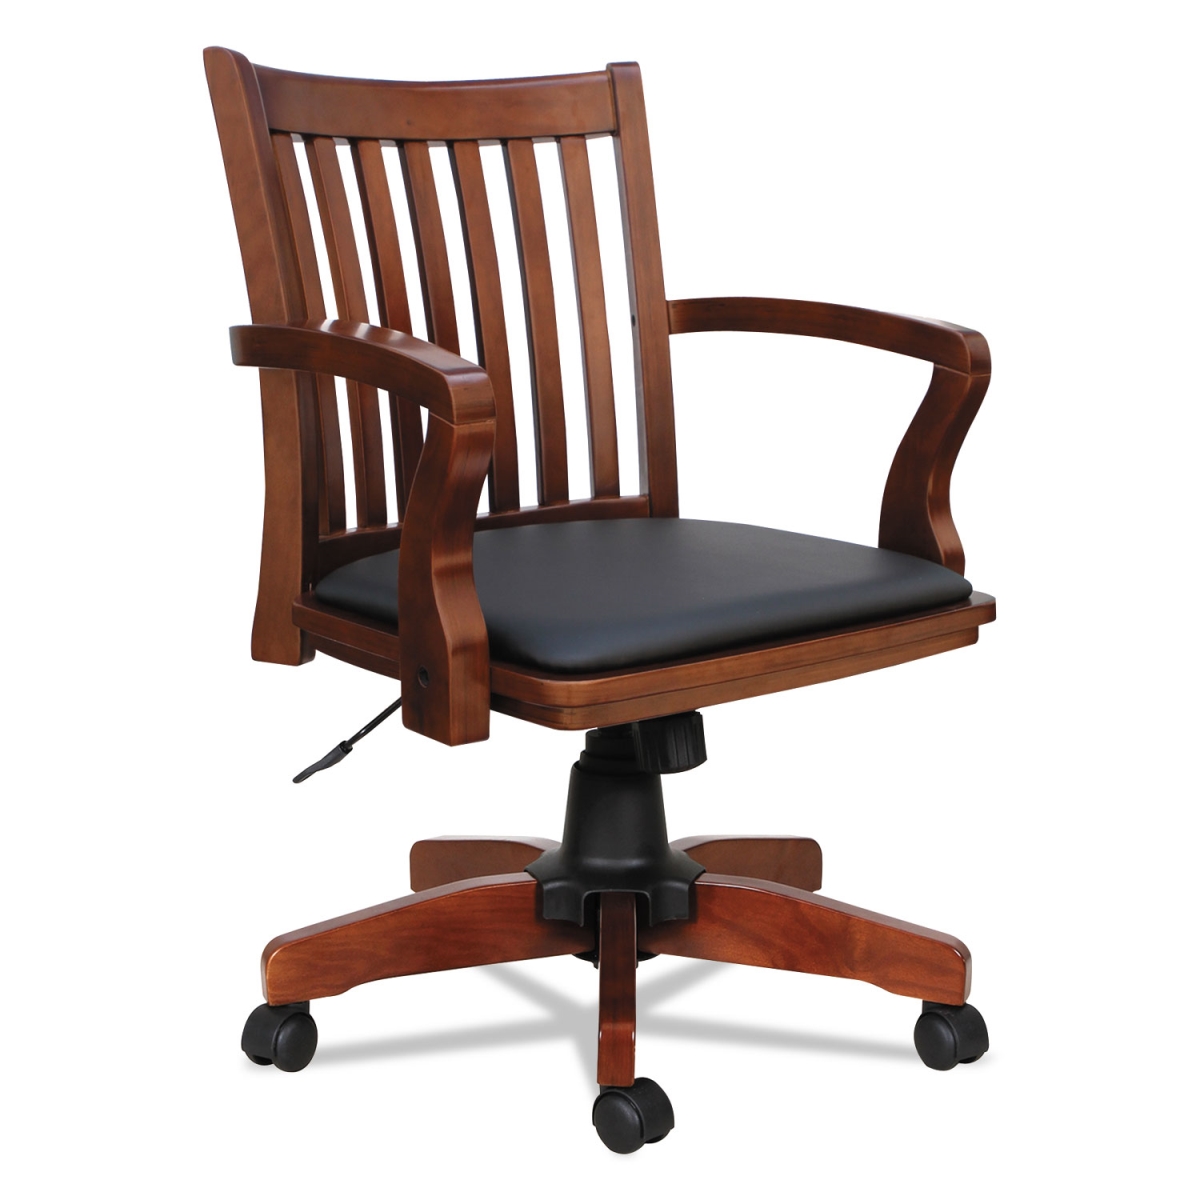 Alera Alepc4299c Postal Series Slat-back Wood & Leather Chair, Cherry & Black